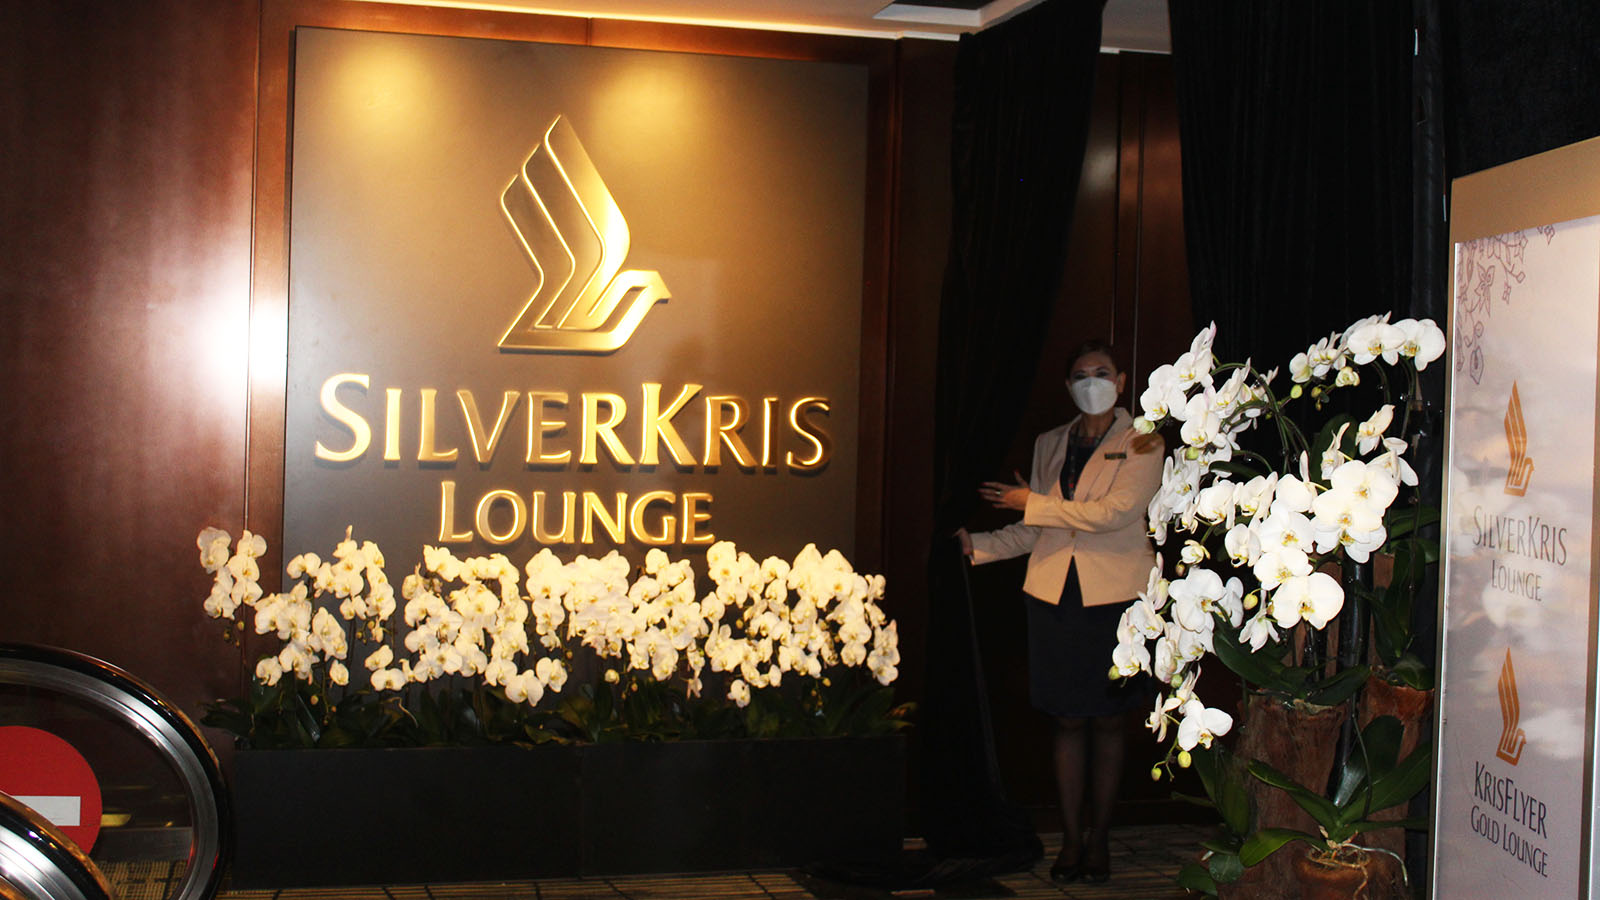 Singapore Airlines SilverKris Lounge